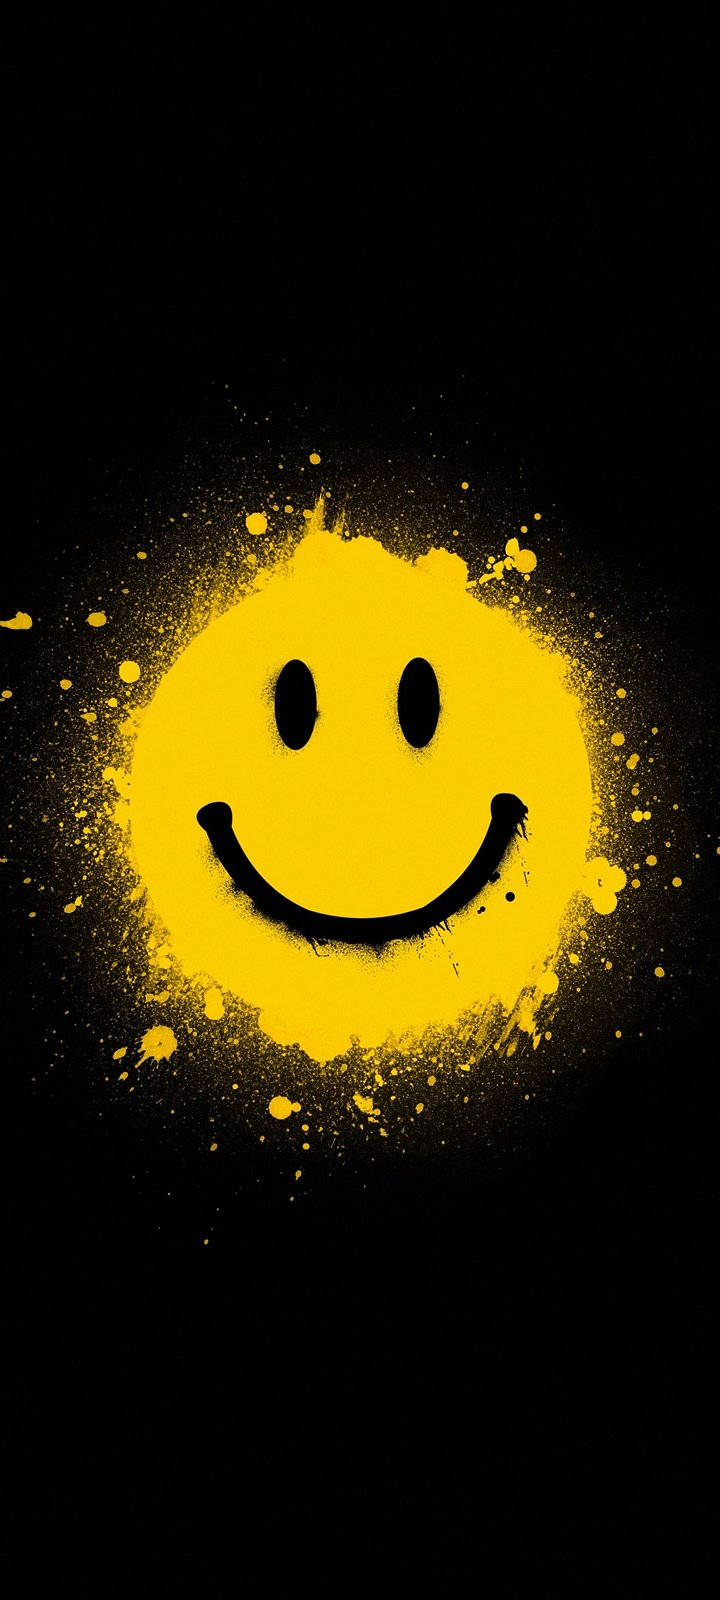 Smiley Face Spray Paint